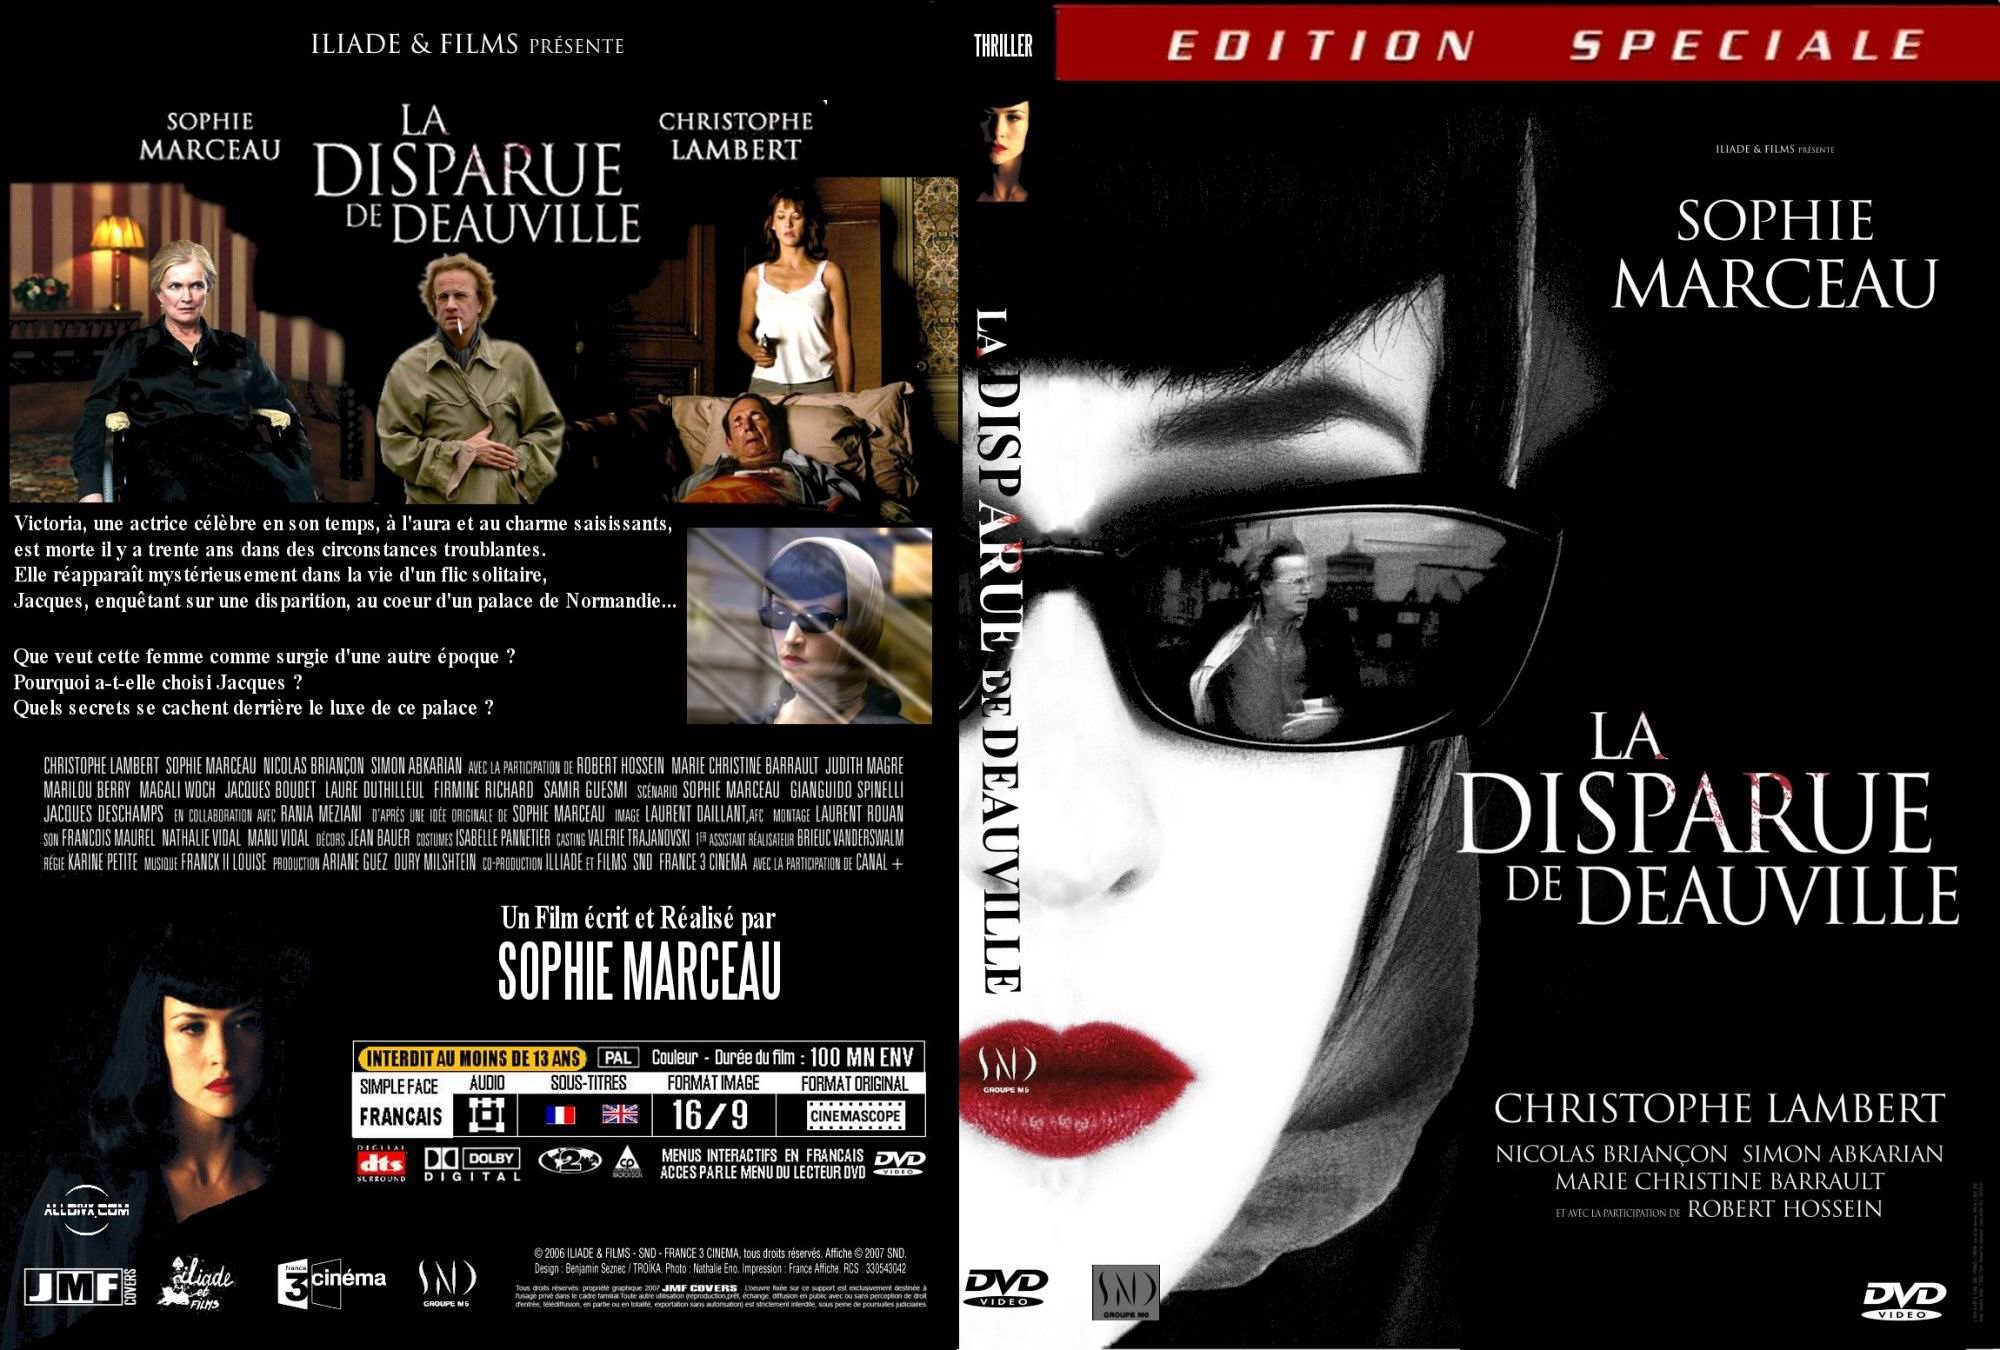 Jaquette DVD La disparue de deauville custom